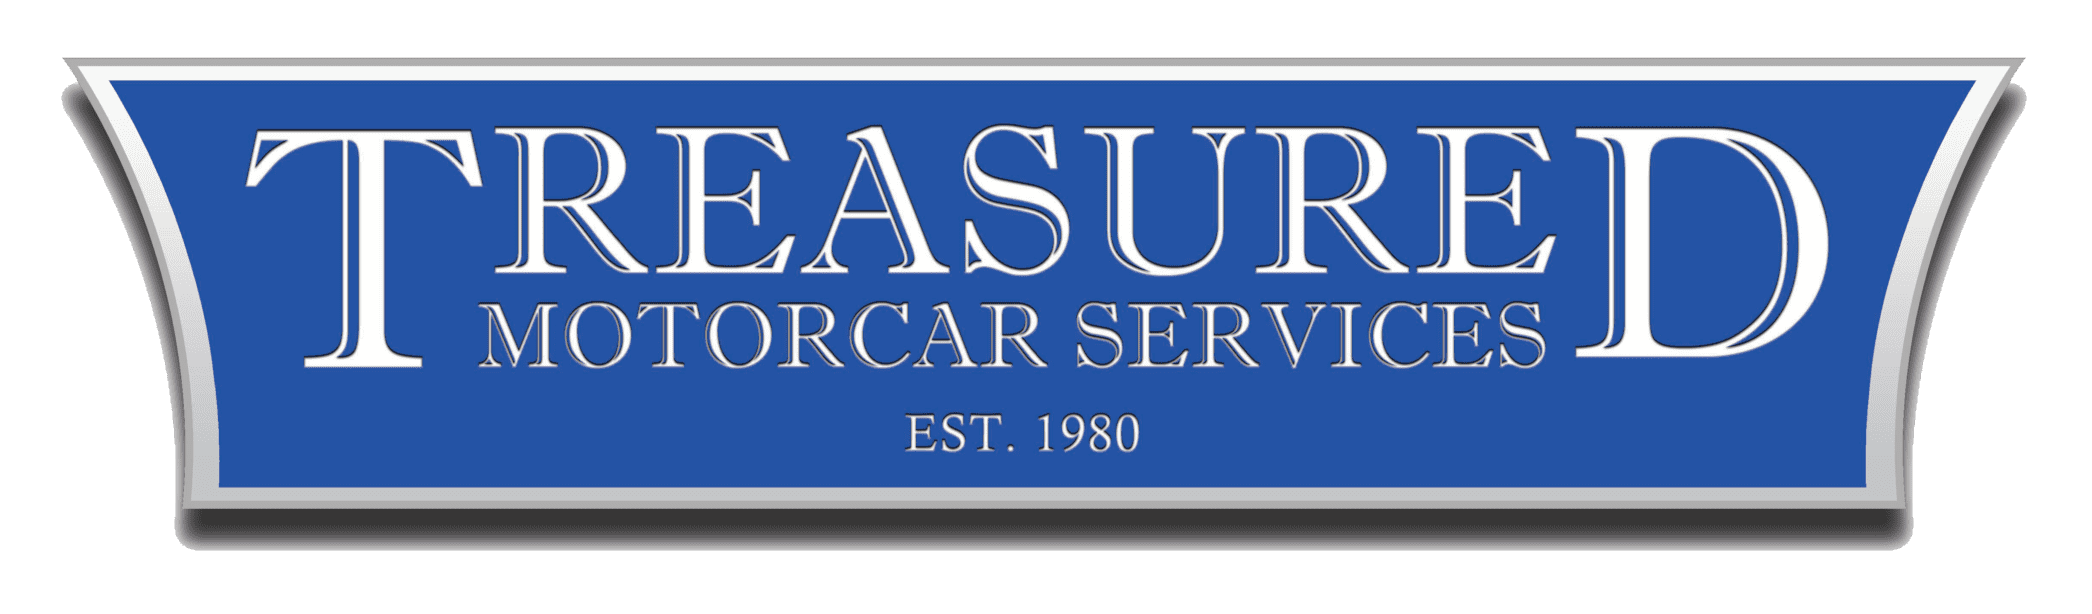 Treasured Motorcar Services